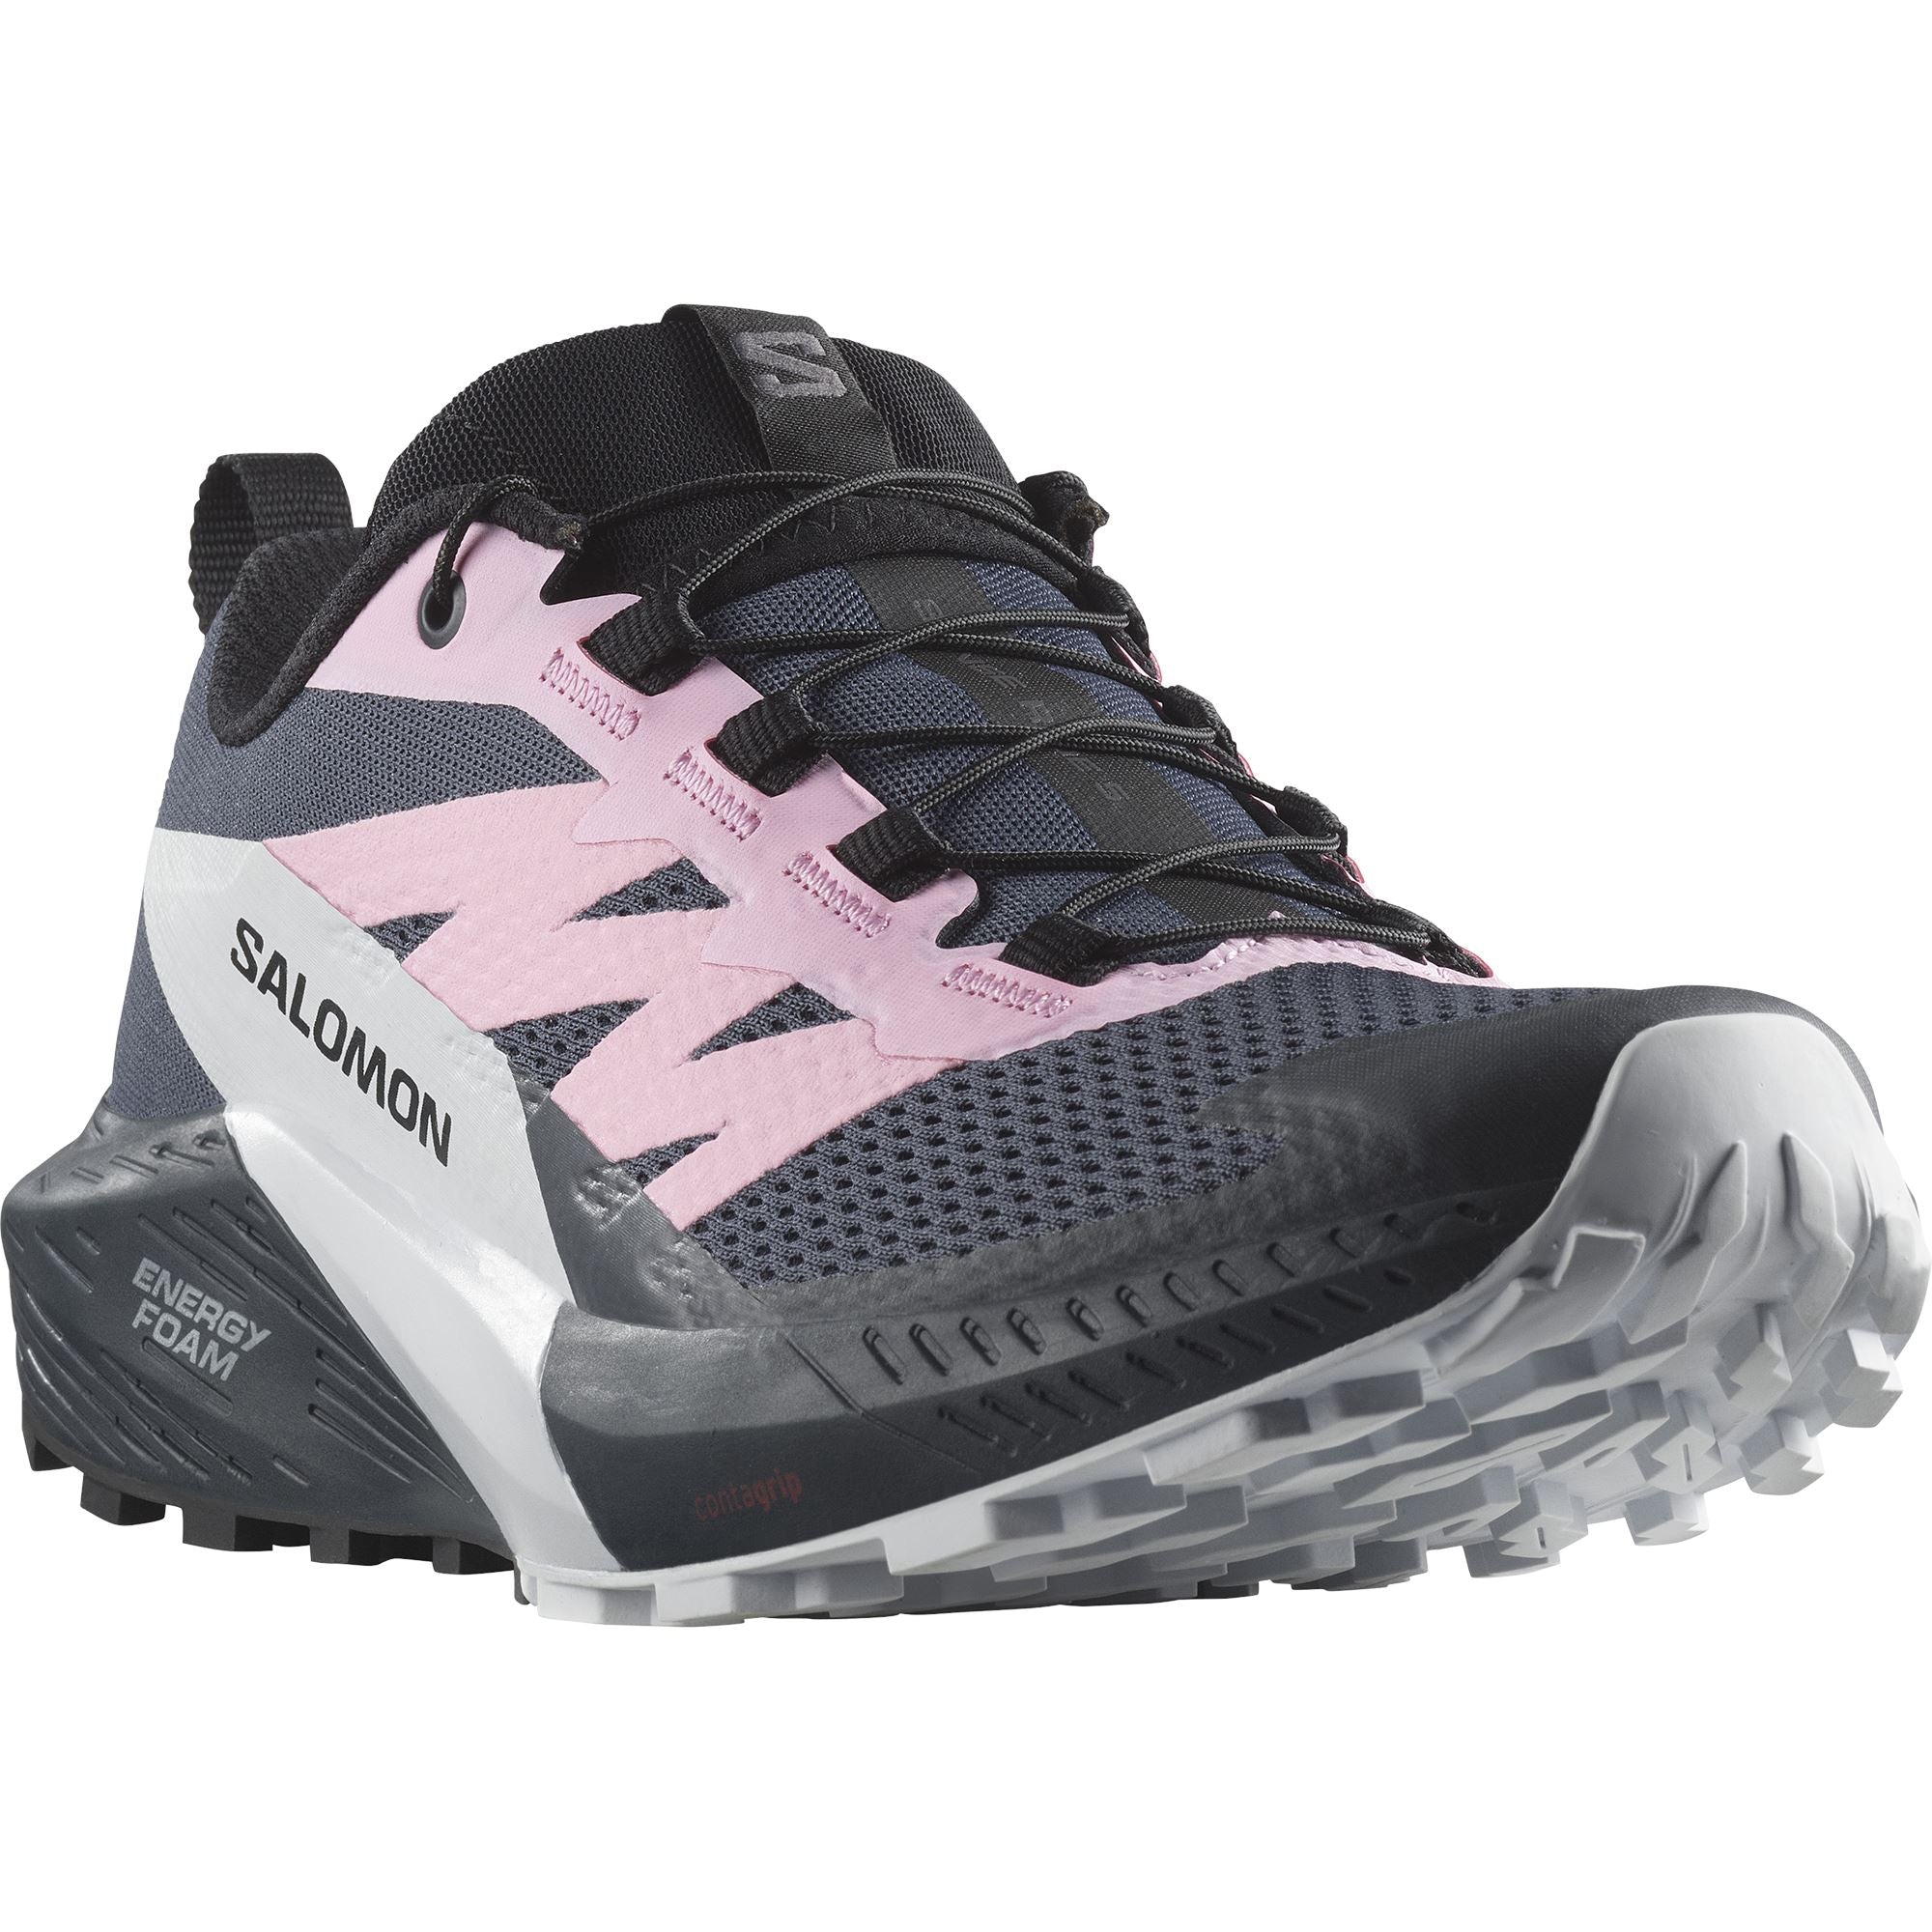 Salomon Sense Ride 5 Women's Trail Running Shoes India Ink / Lilac Sachet / Arctic Ice US 6.5 